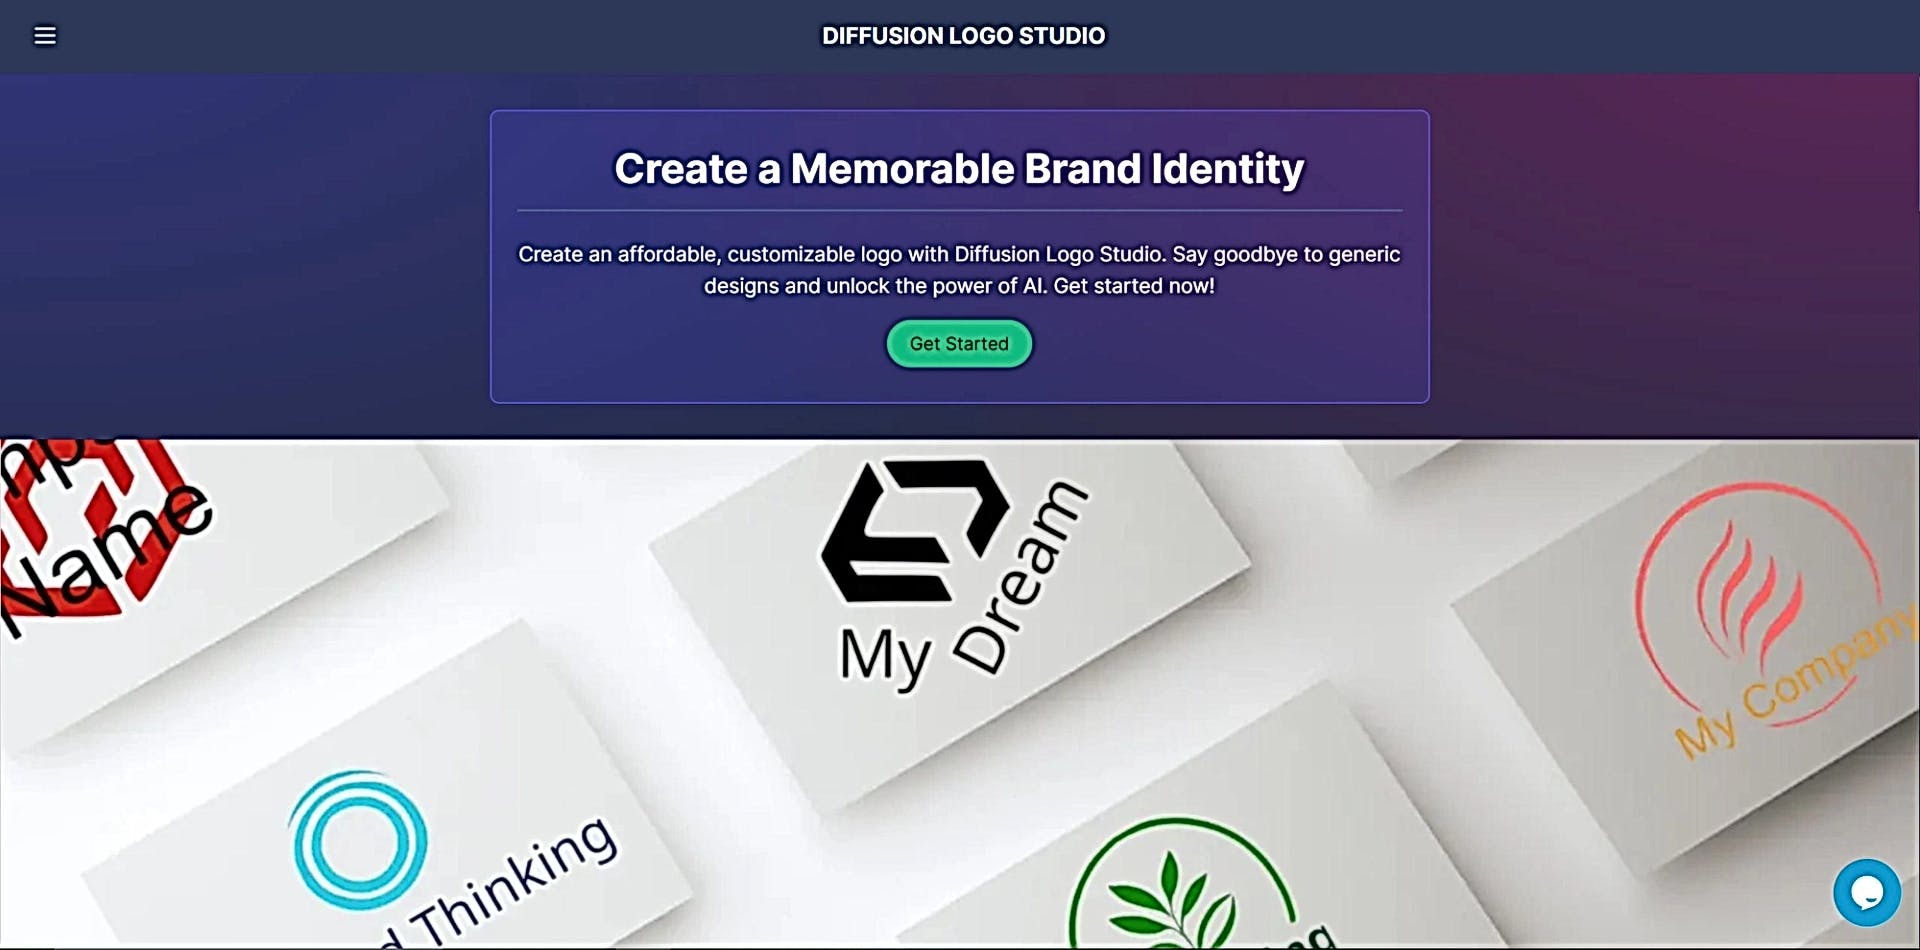 Diffusion Logo Studio featured